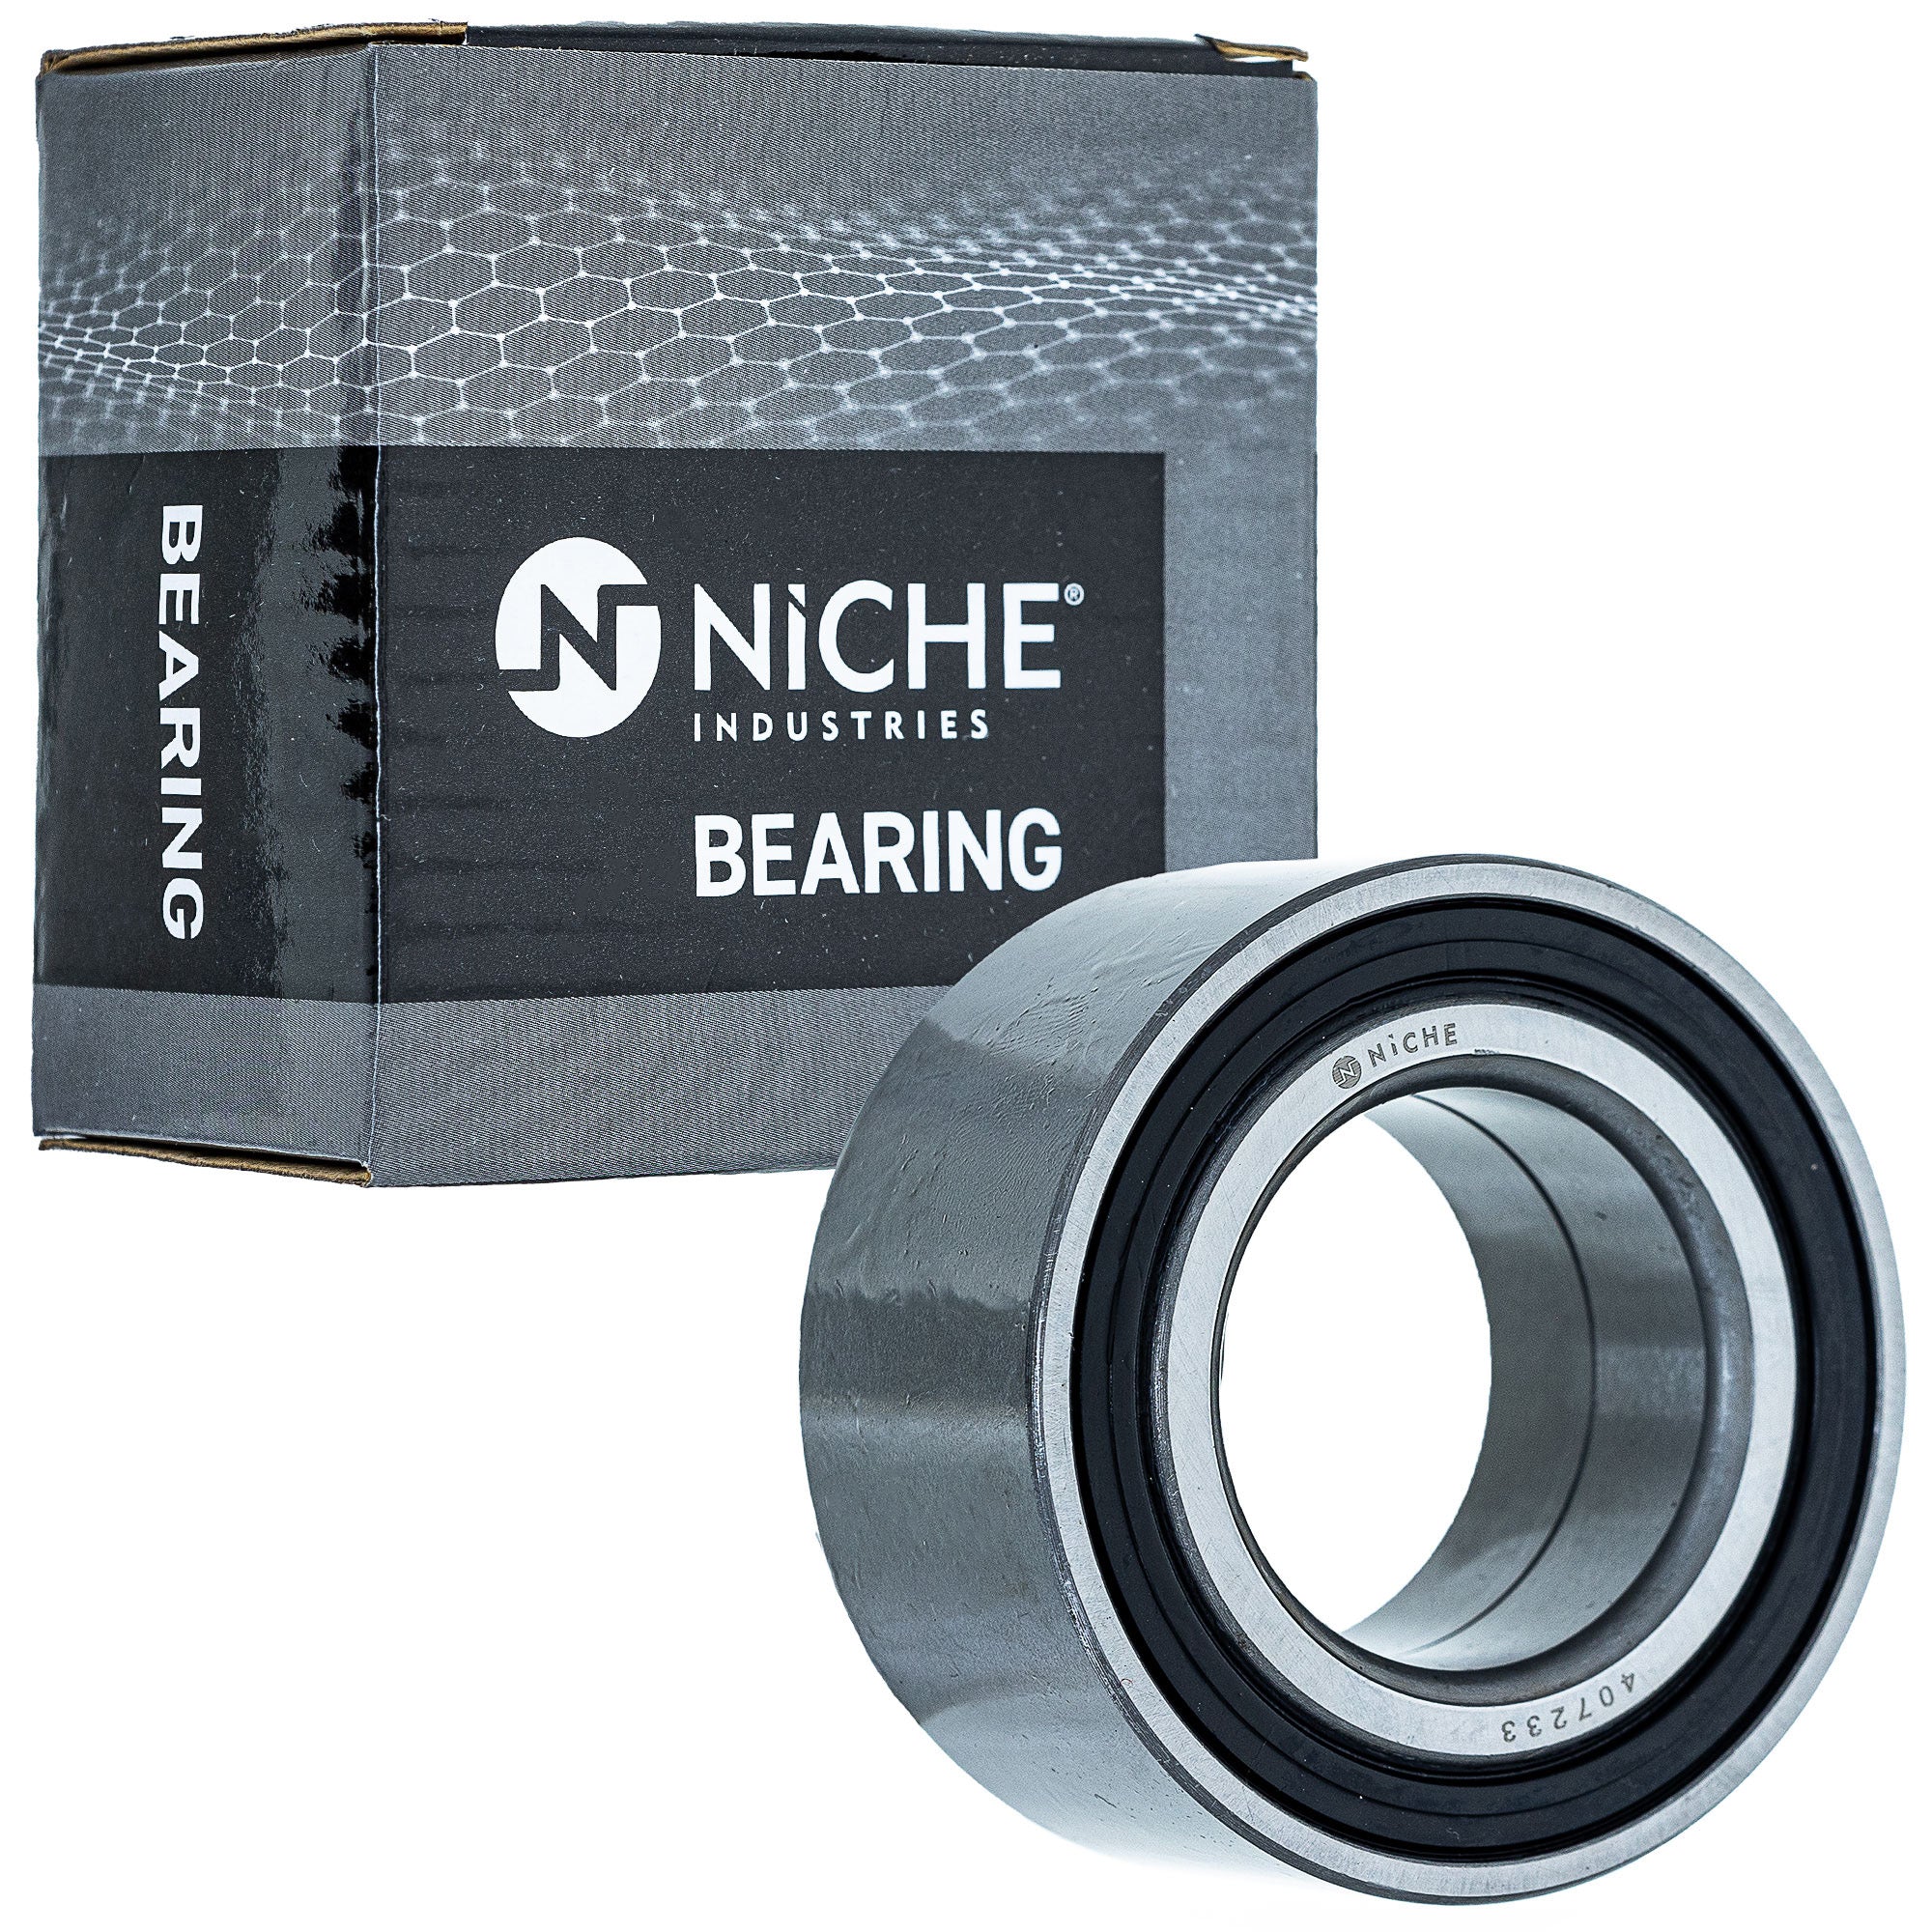 NICHE 519-CBB2292R Bearing 2-Pack for zOTHER Polaris Xplorer Worker